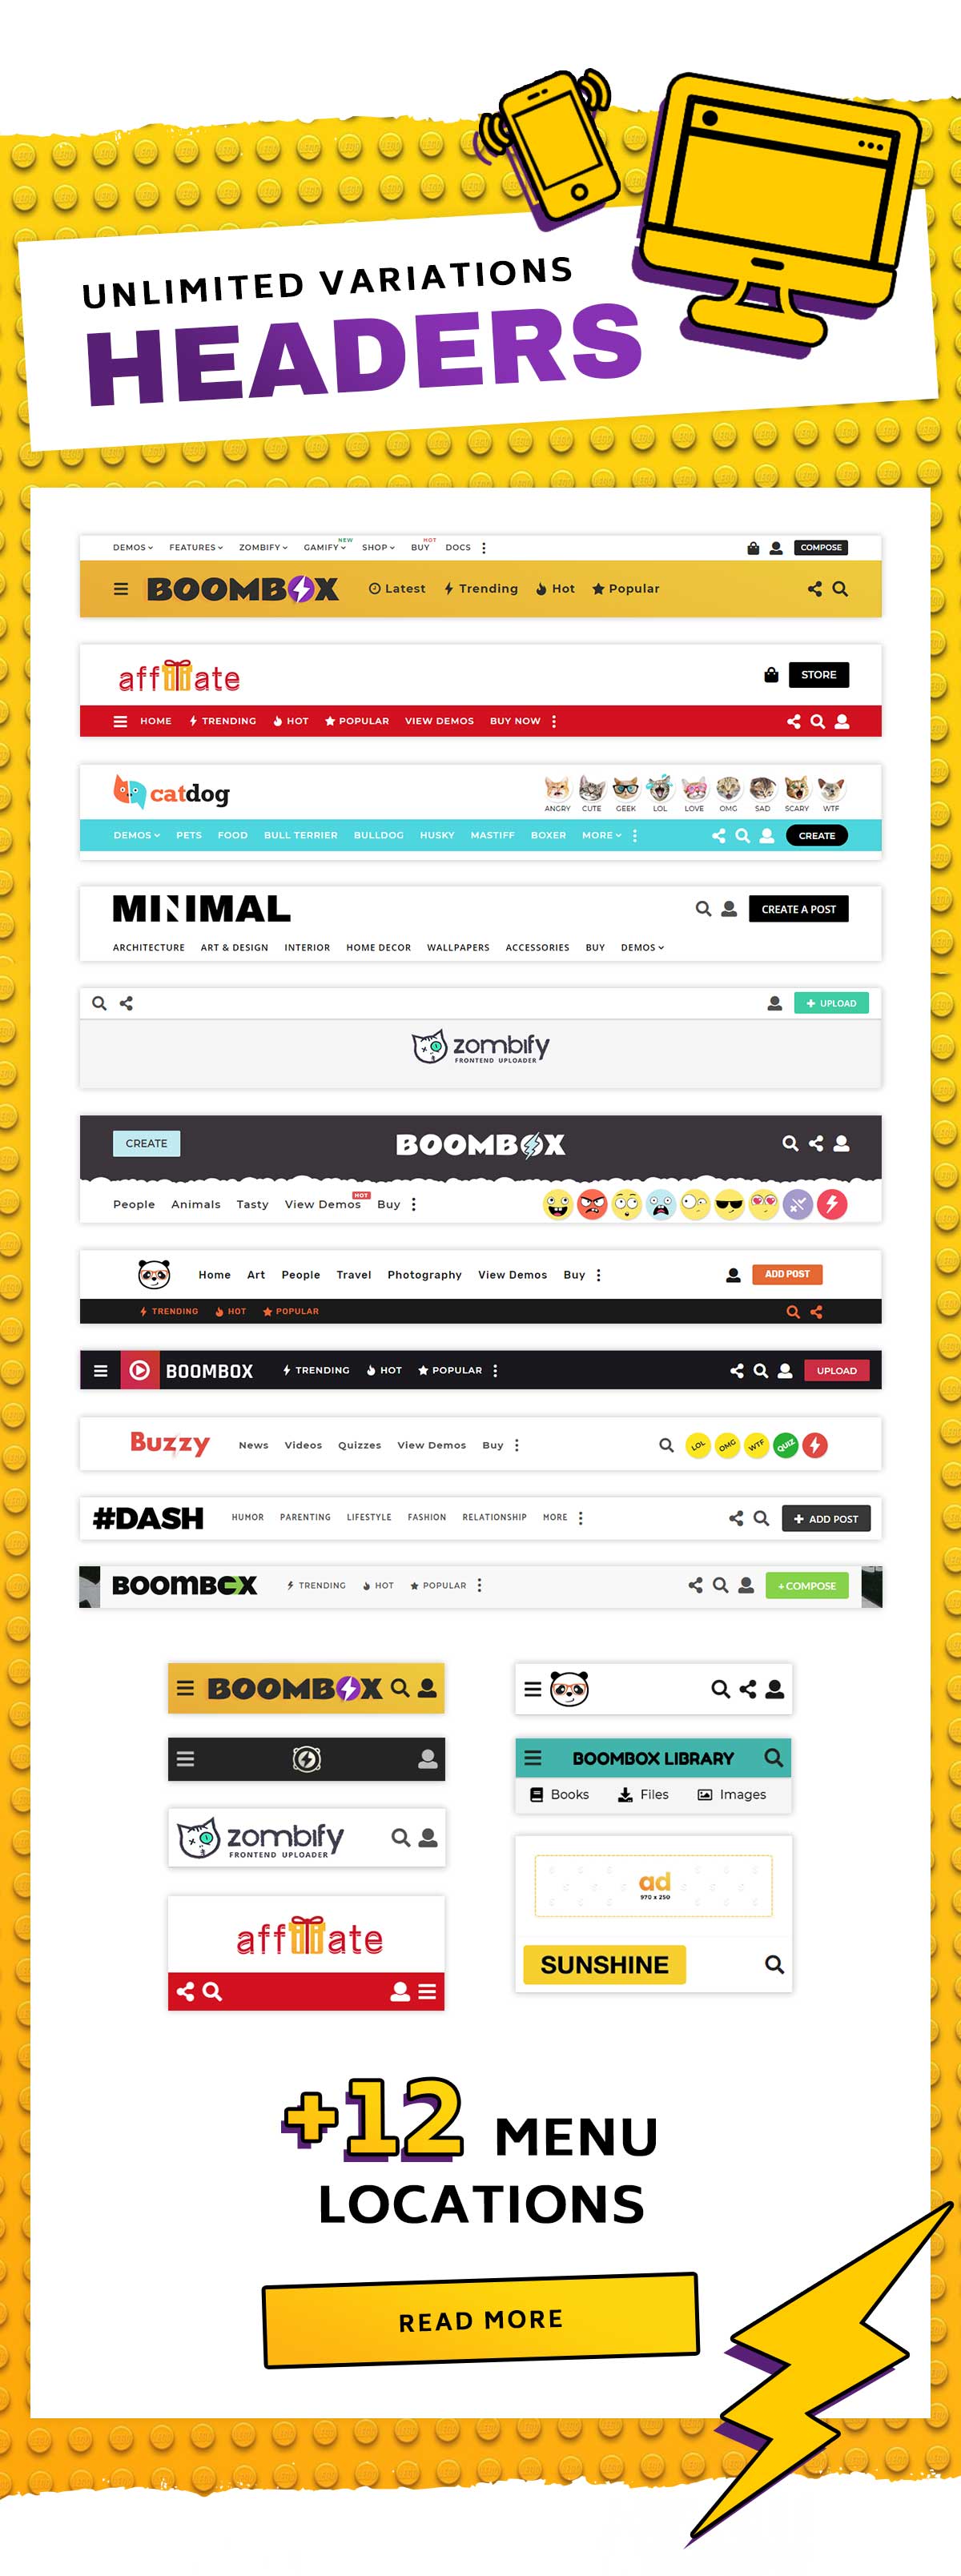 boombox new presentation header2 - BoomBox — Viral Magazine WordPress Theme